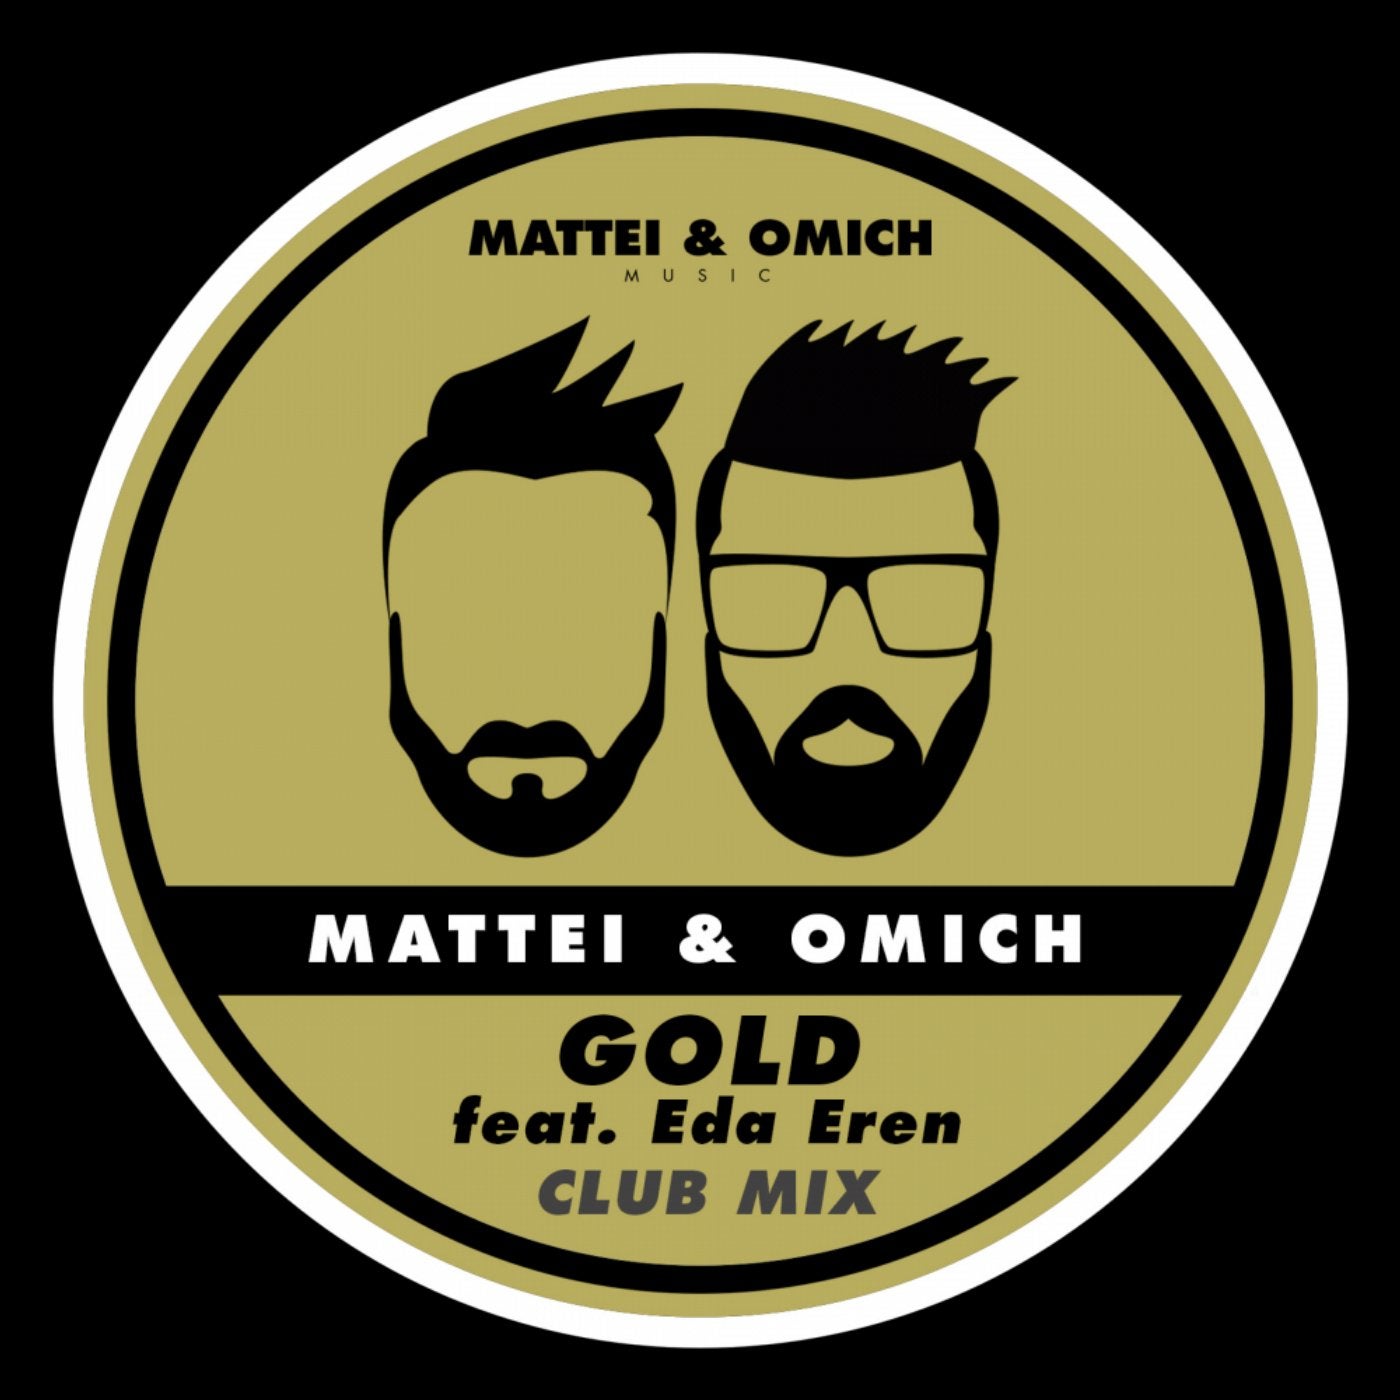 Gold (Club Mix)